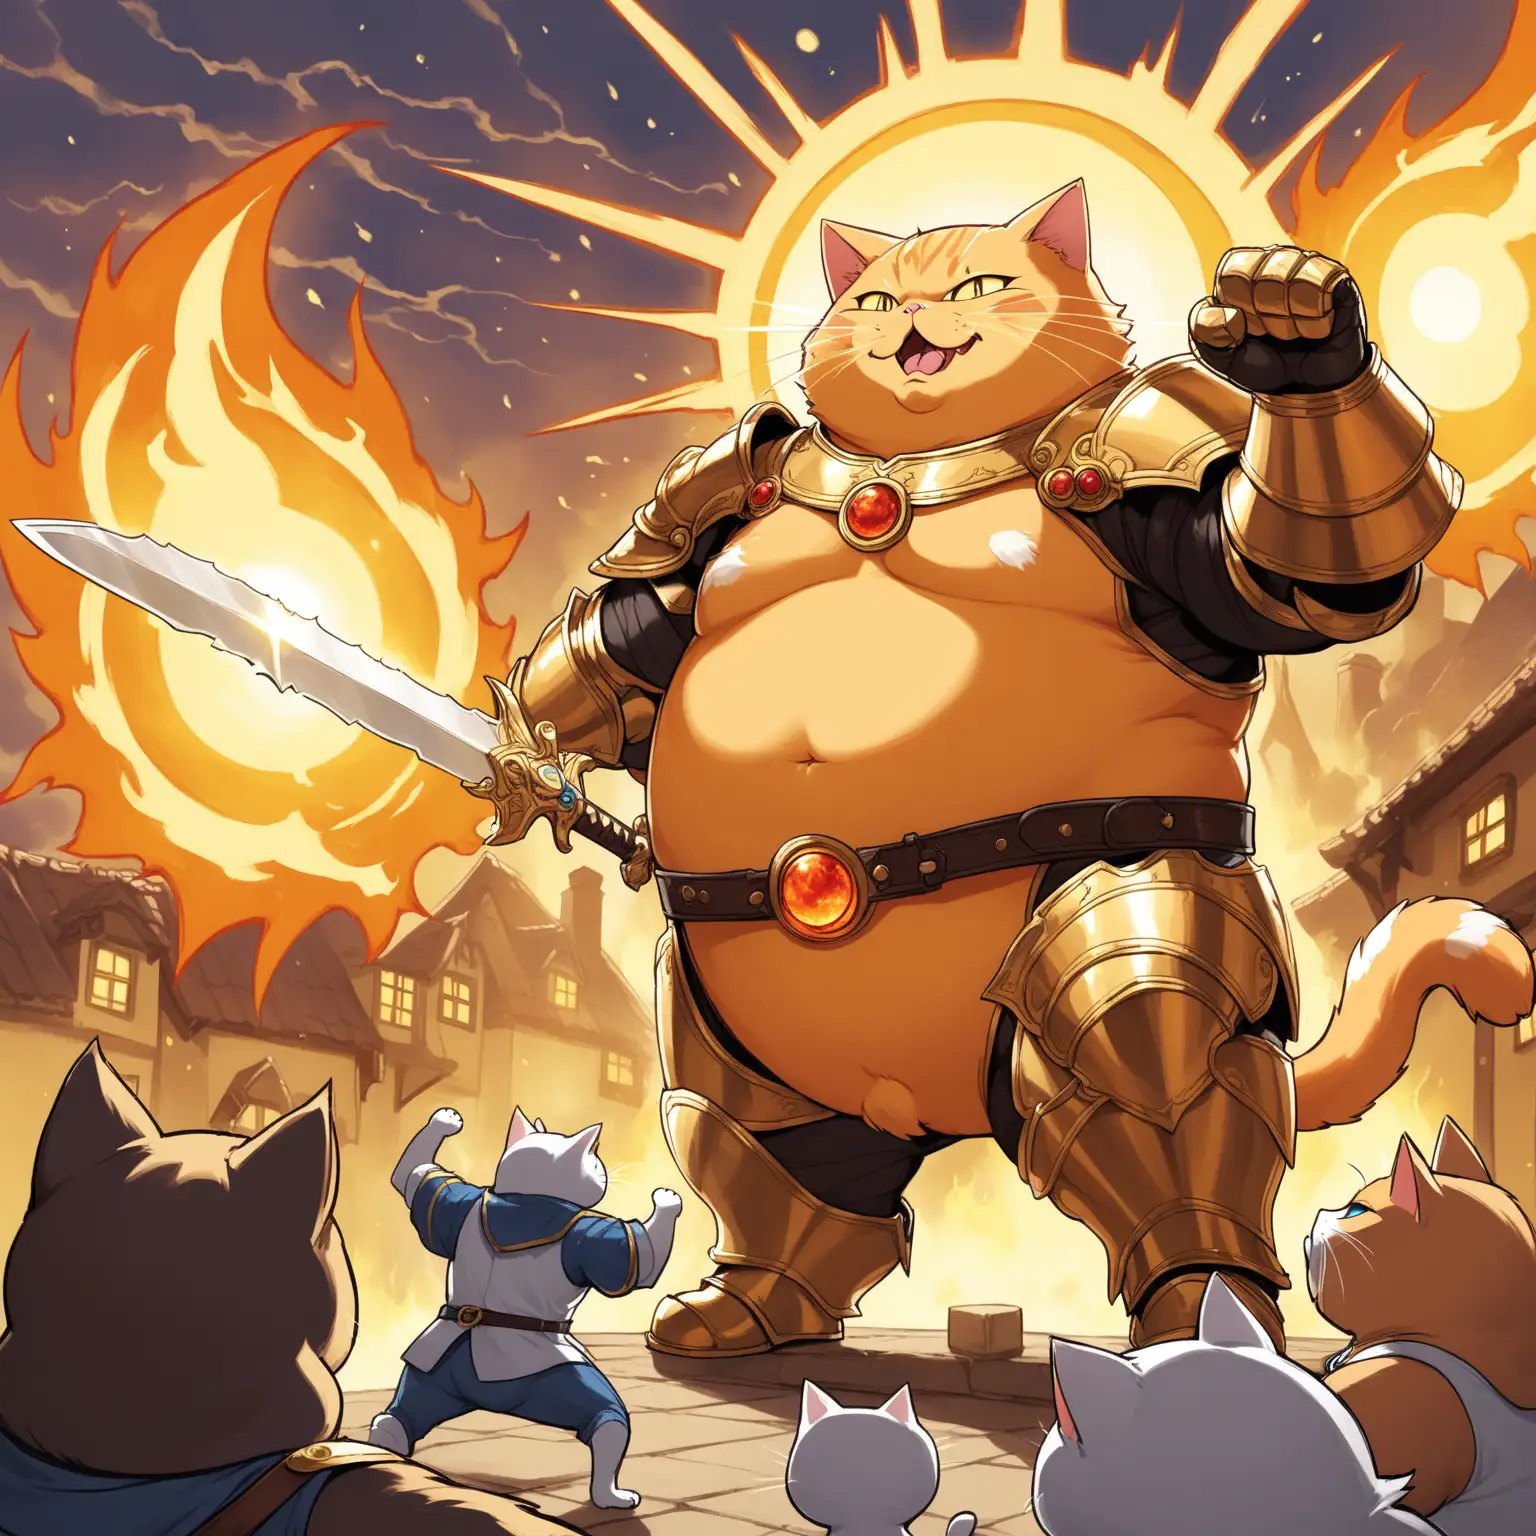 Blonde Cat Warrior Mordenkainen in a Fierce Confrontation with Sunspark Ghost